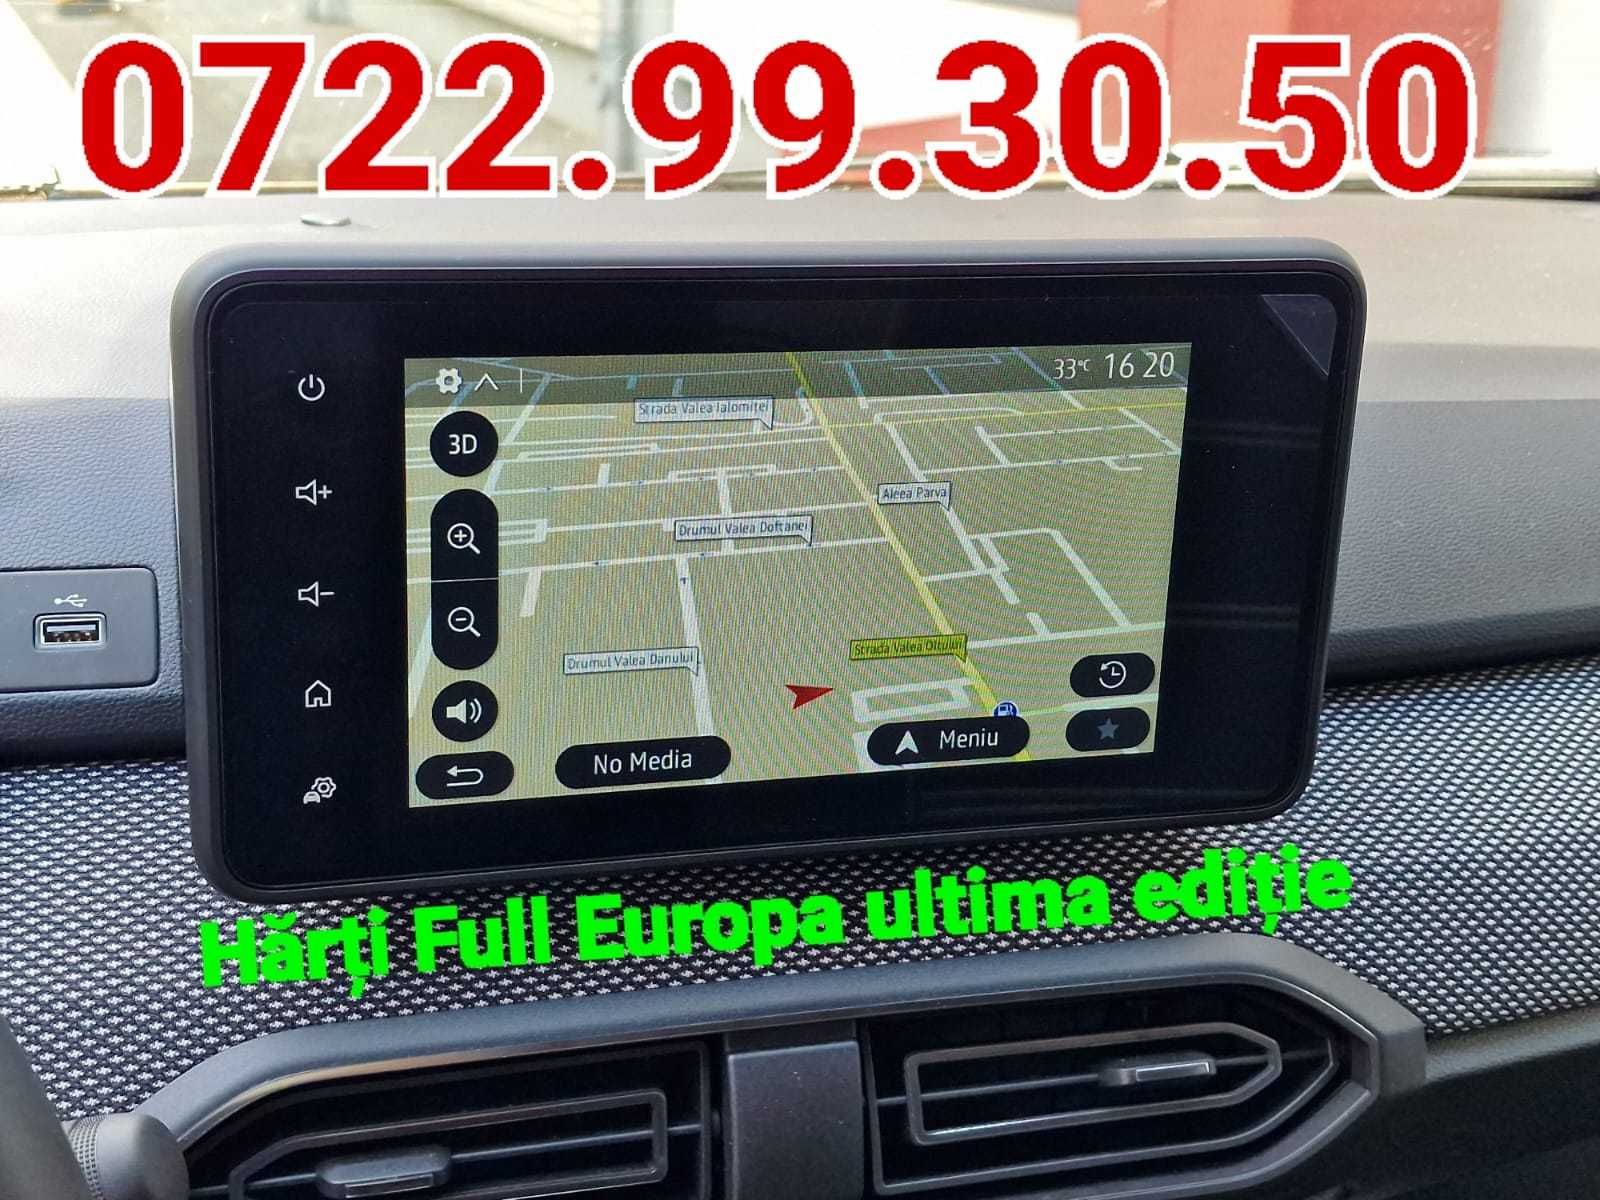 Harta Dacia MN.4 Media Display Navigatie Harti Gps Dacia Update Logan